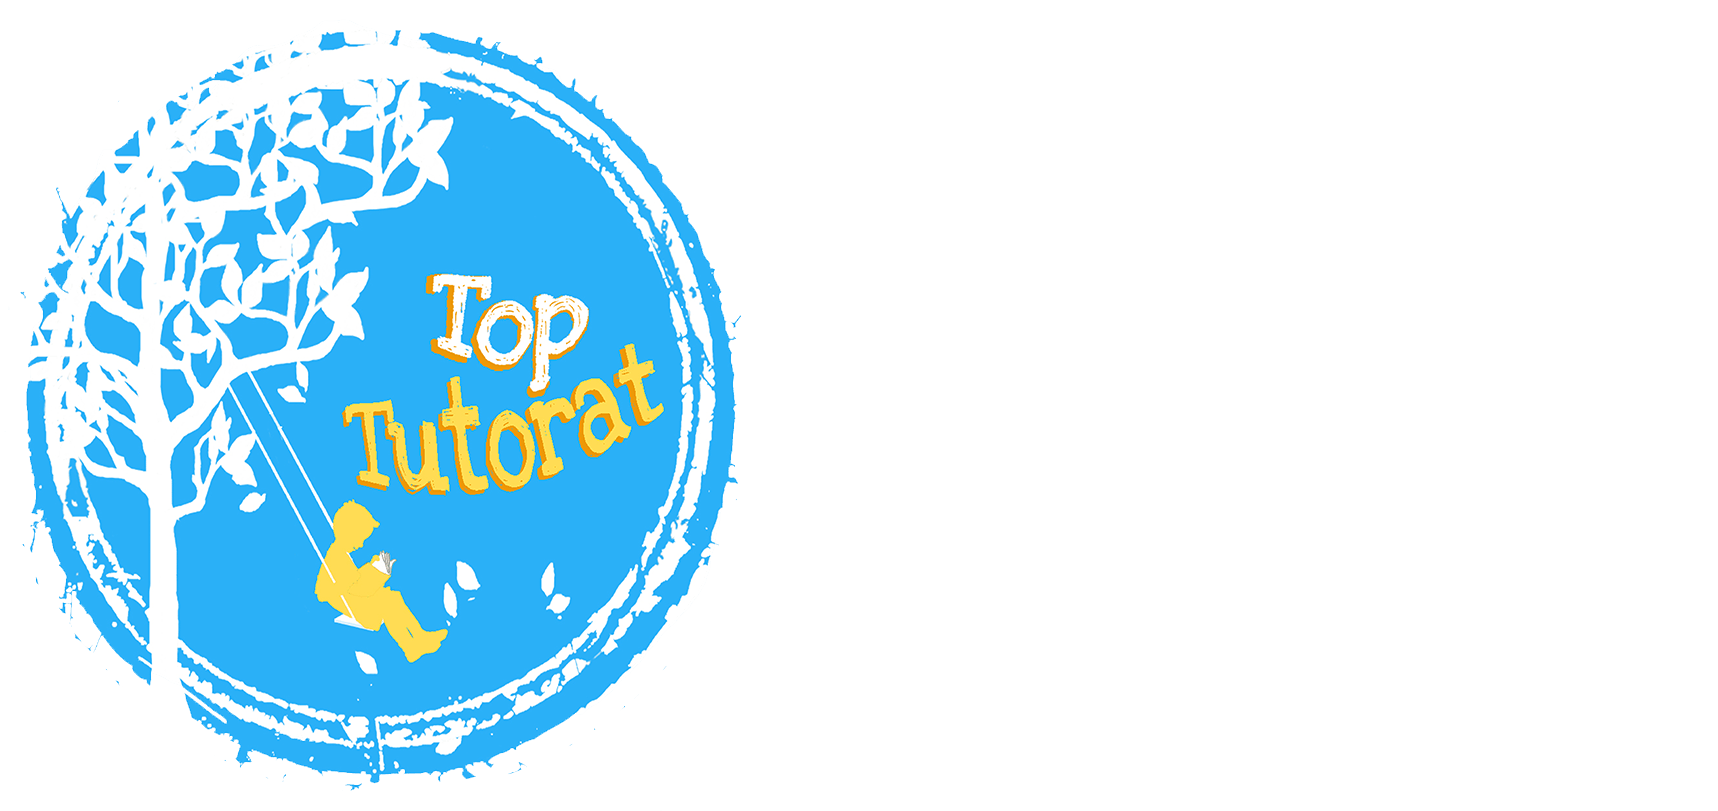 Top-Tutorat - Tutoring & mentoring for elementary students